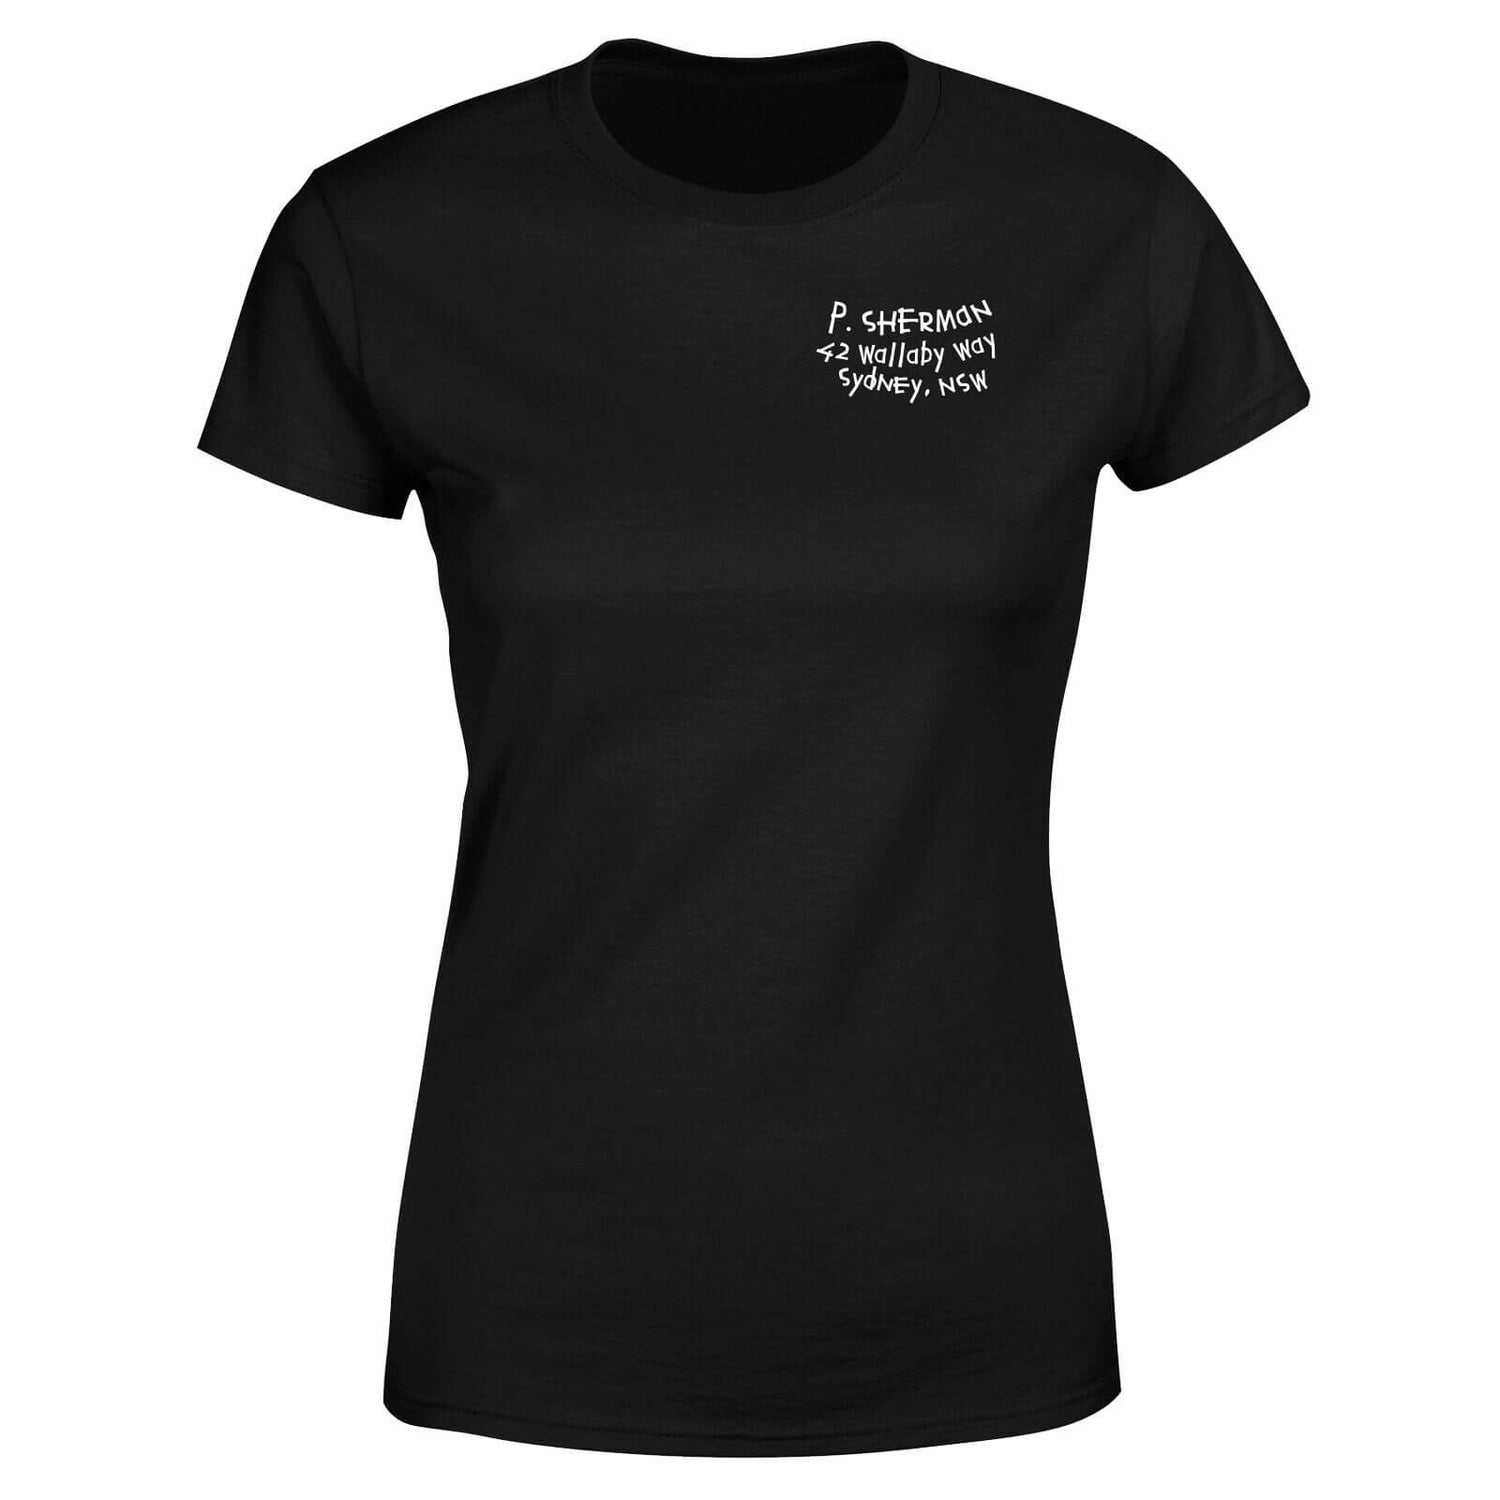 Finding Nemo P.Sherman Address Women's T-Shirt - Black